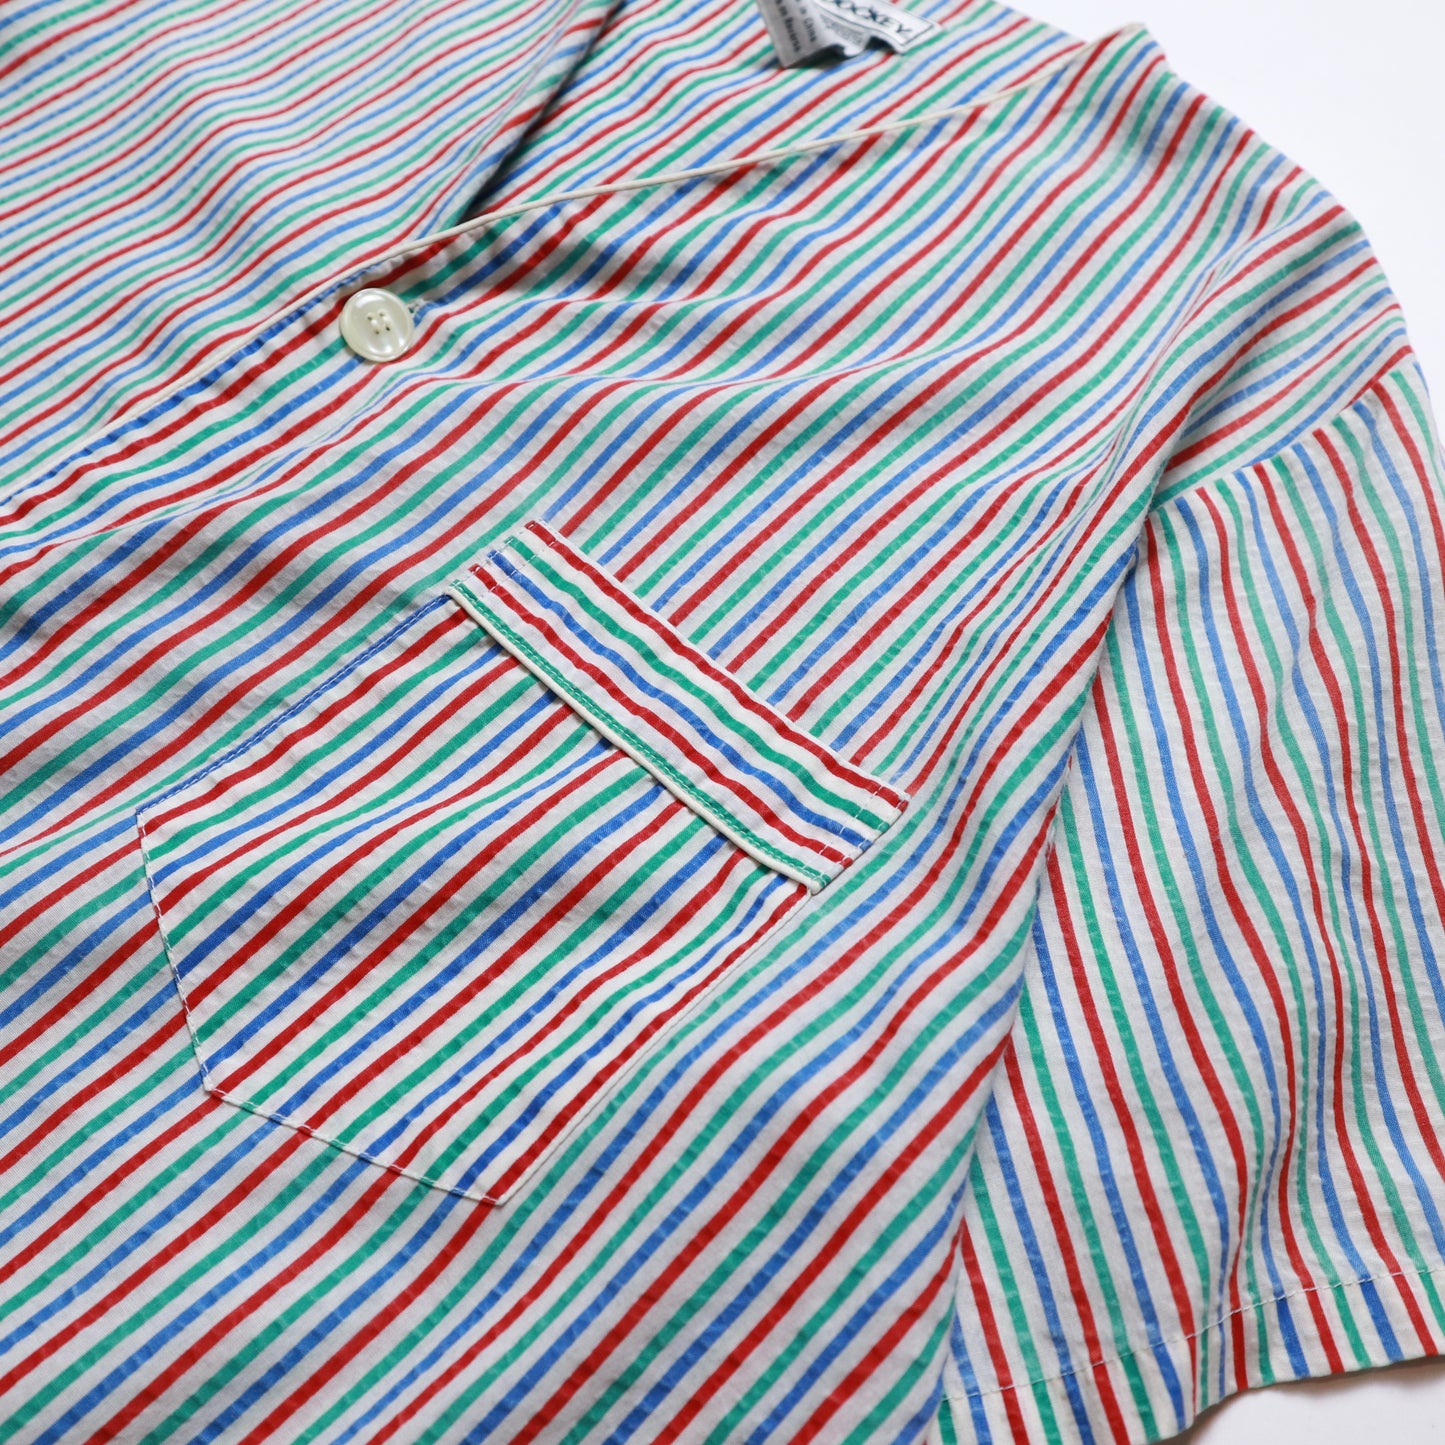 Pajama shirt colorful striped pajama shirt striped blouse